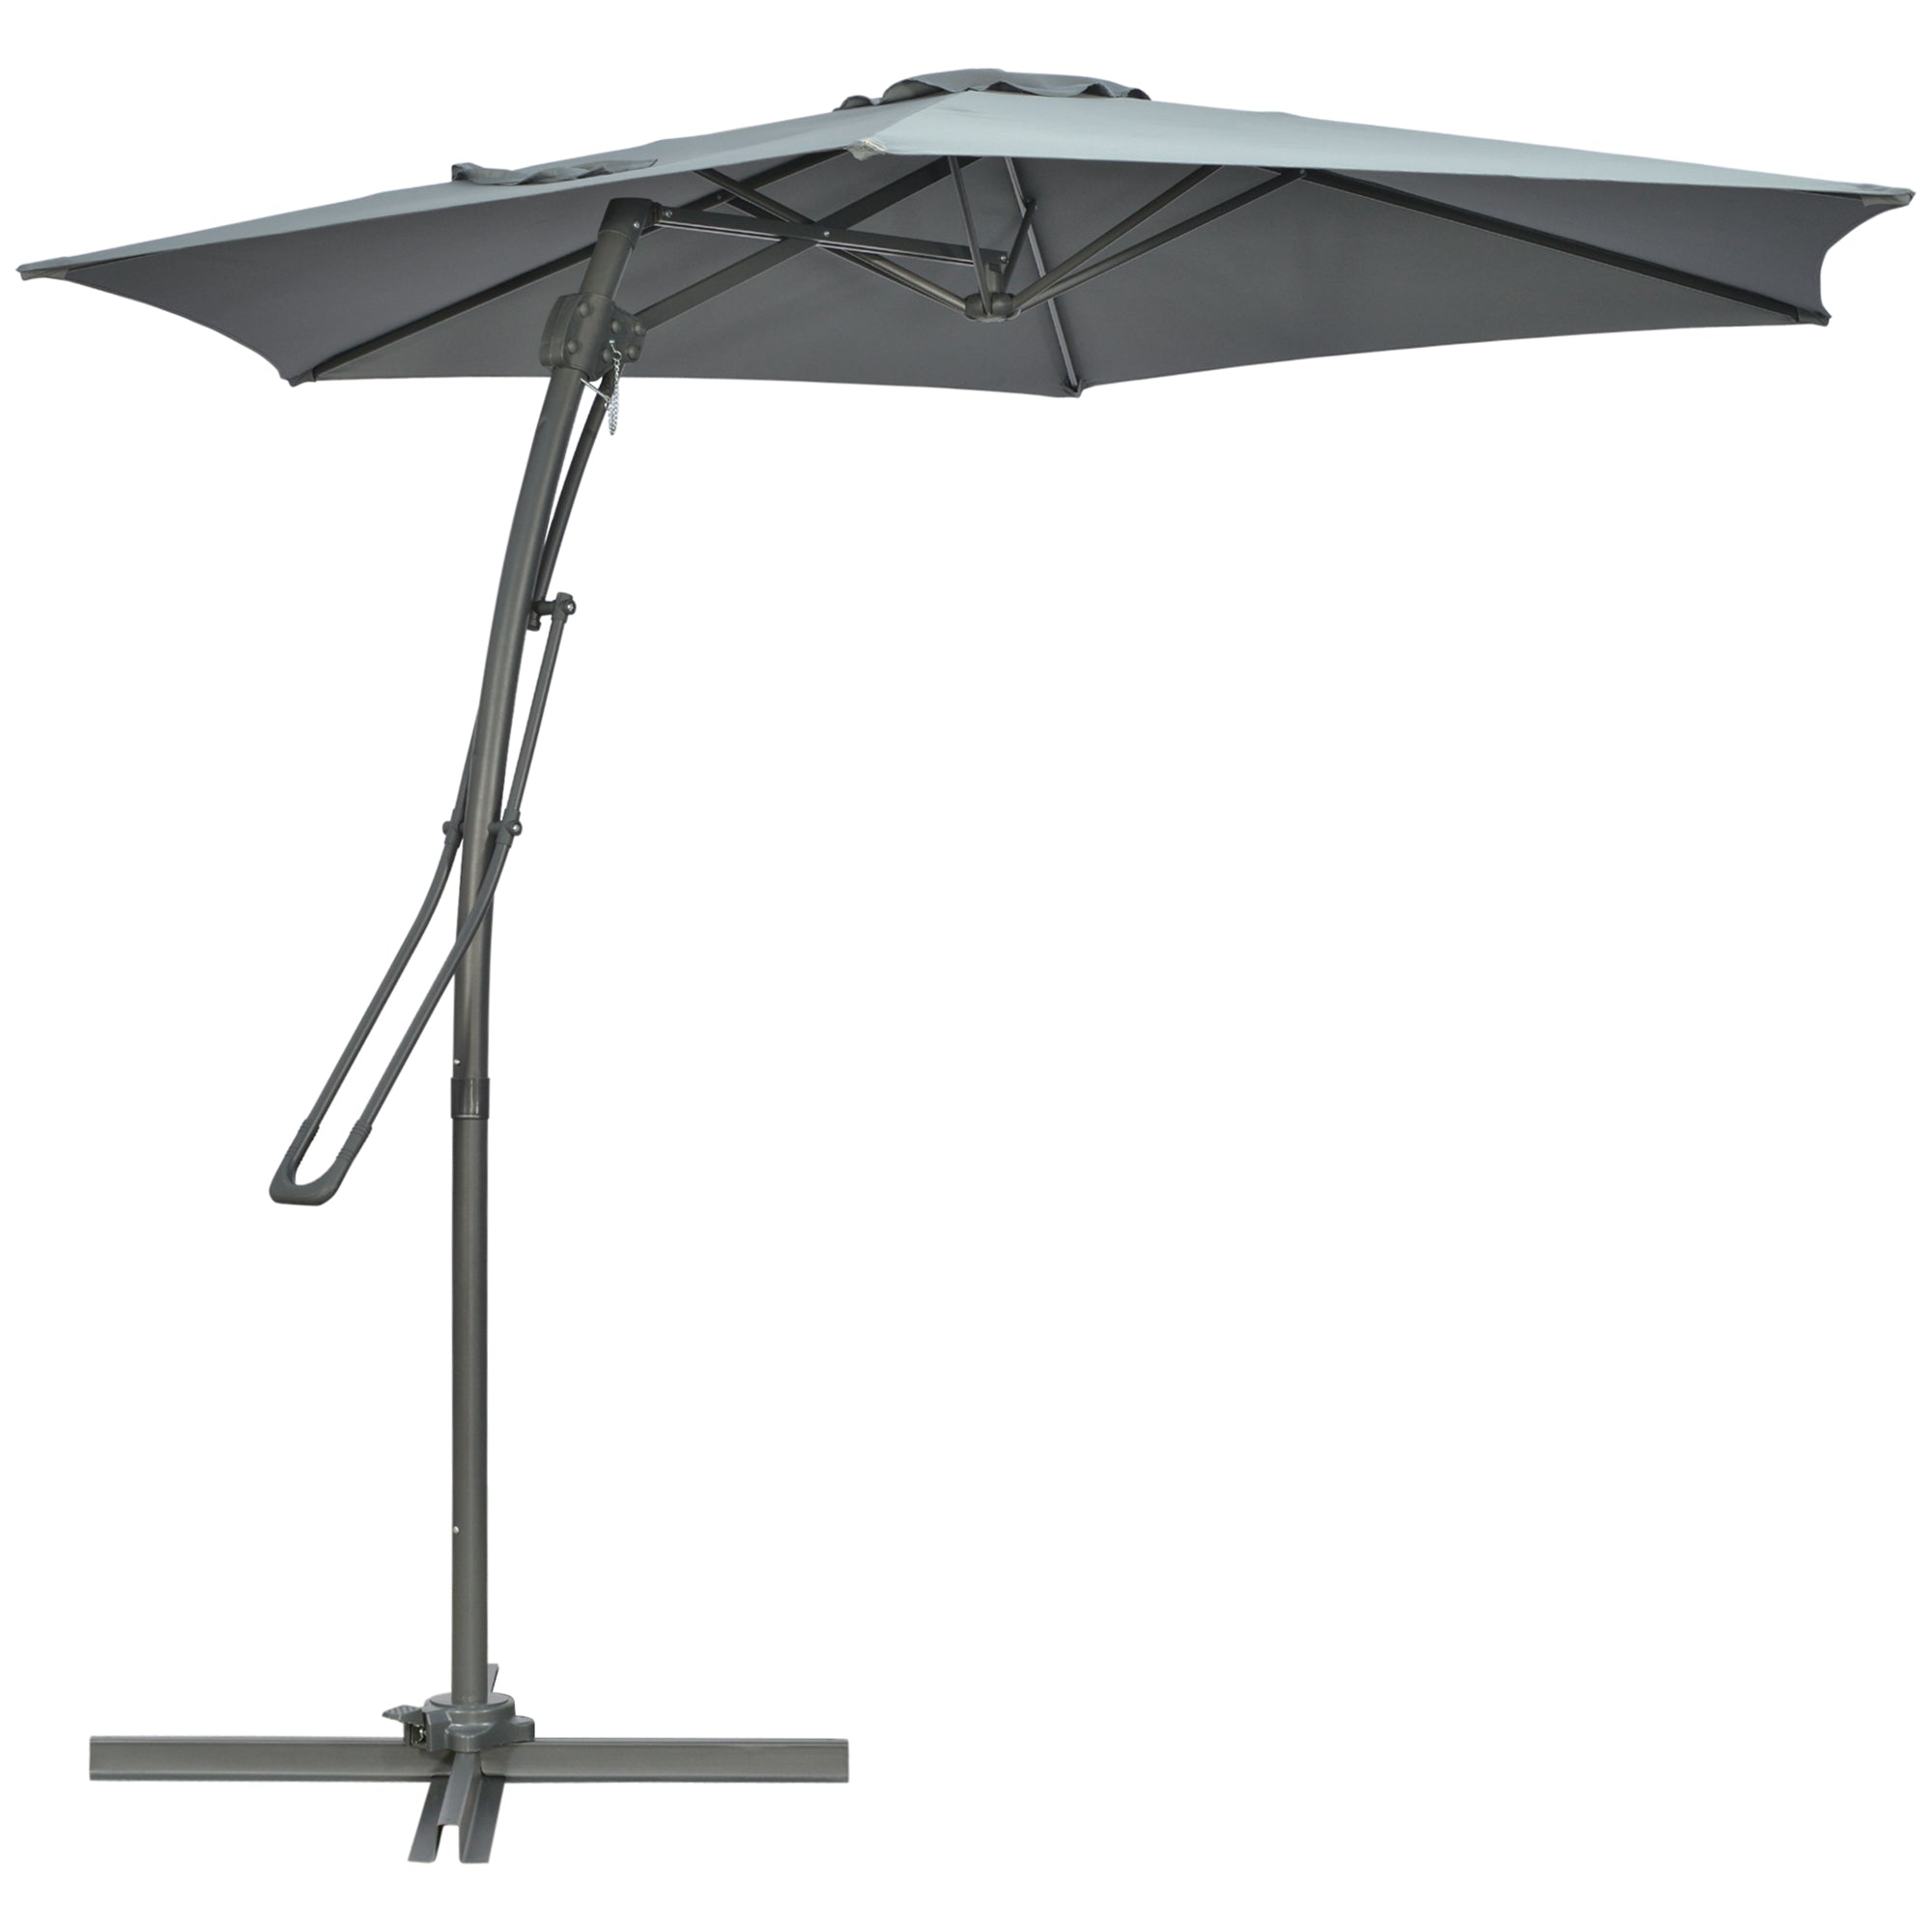 3m Cantilever Parasol with Easy Lever, Patio Umbrella with Crank Handle, Cross Base and 6 Metal Ribs, Outdoor Sun Shades for Garden, Grey-0